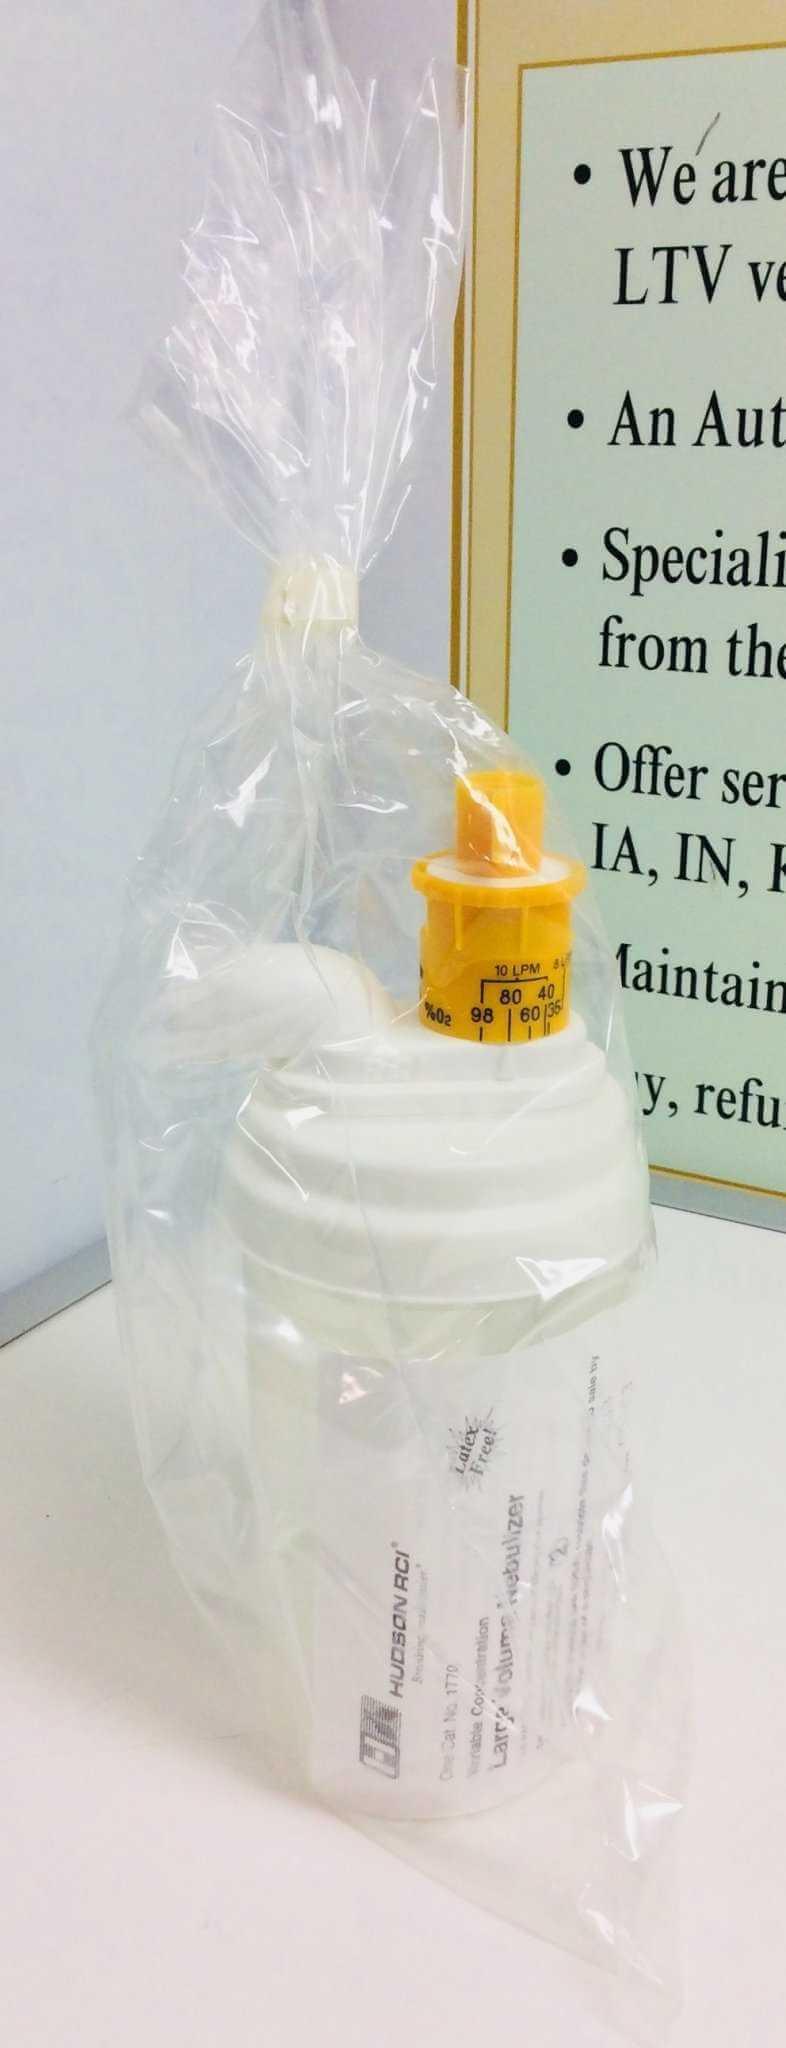 NEW Hudson RCI Disposable Large Volume Nebulizer Humidifier Bottle 1770 - MBR Medicals